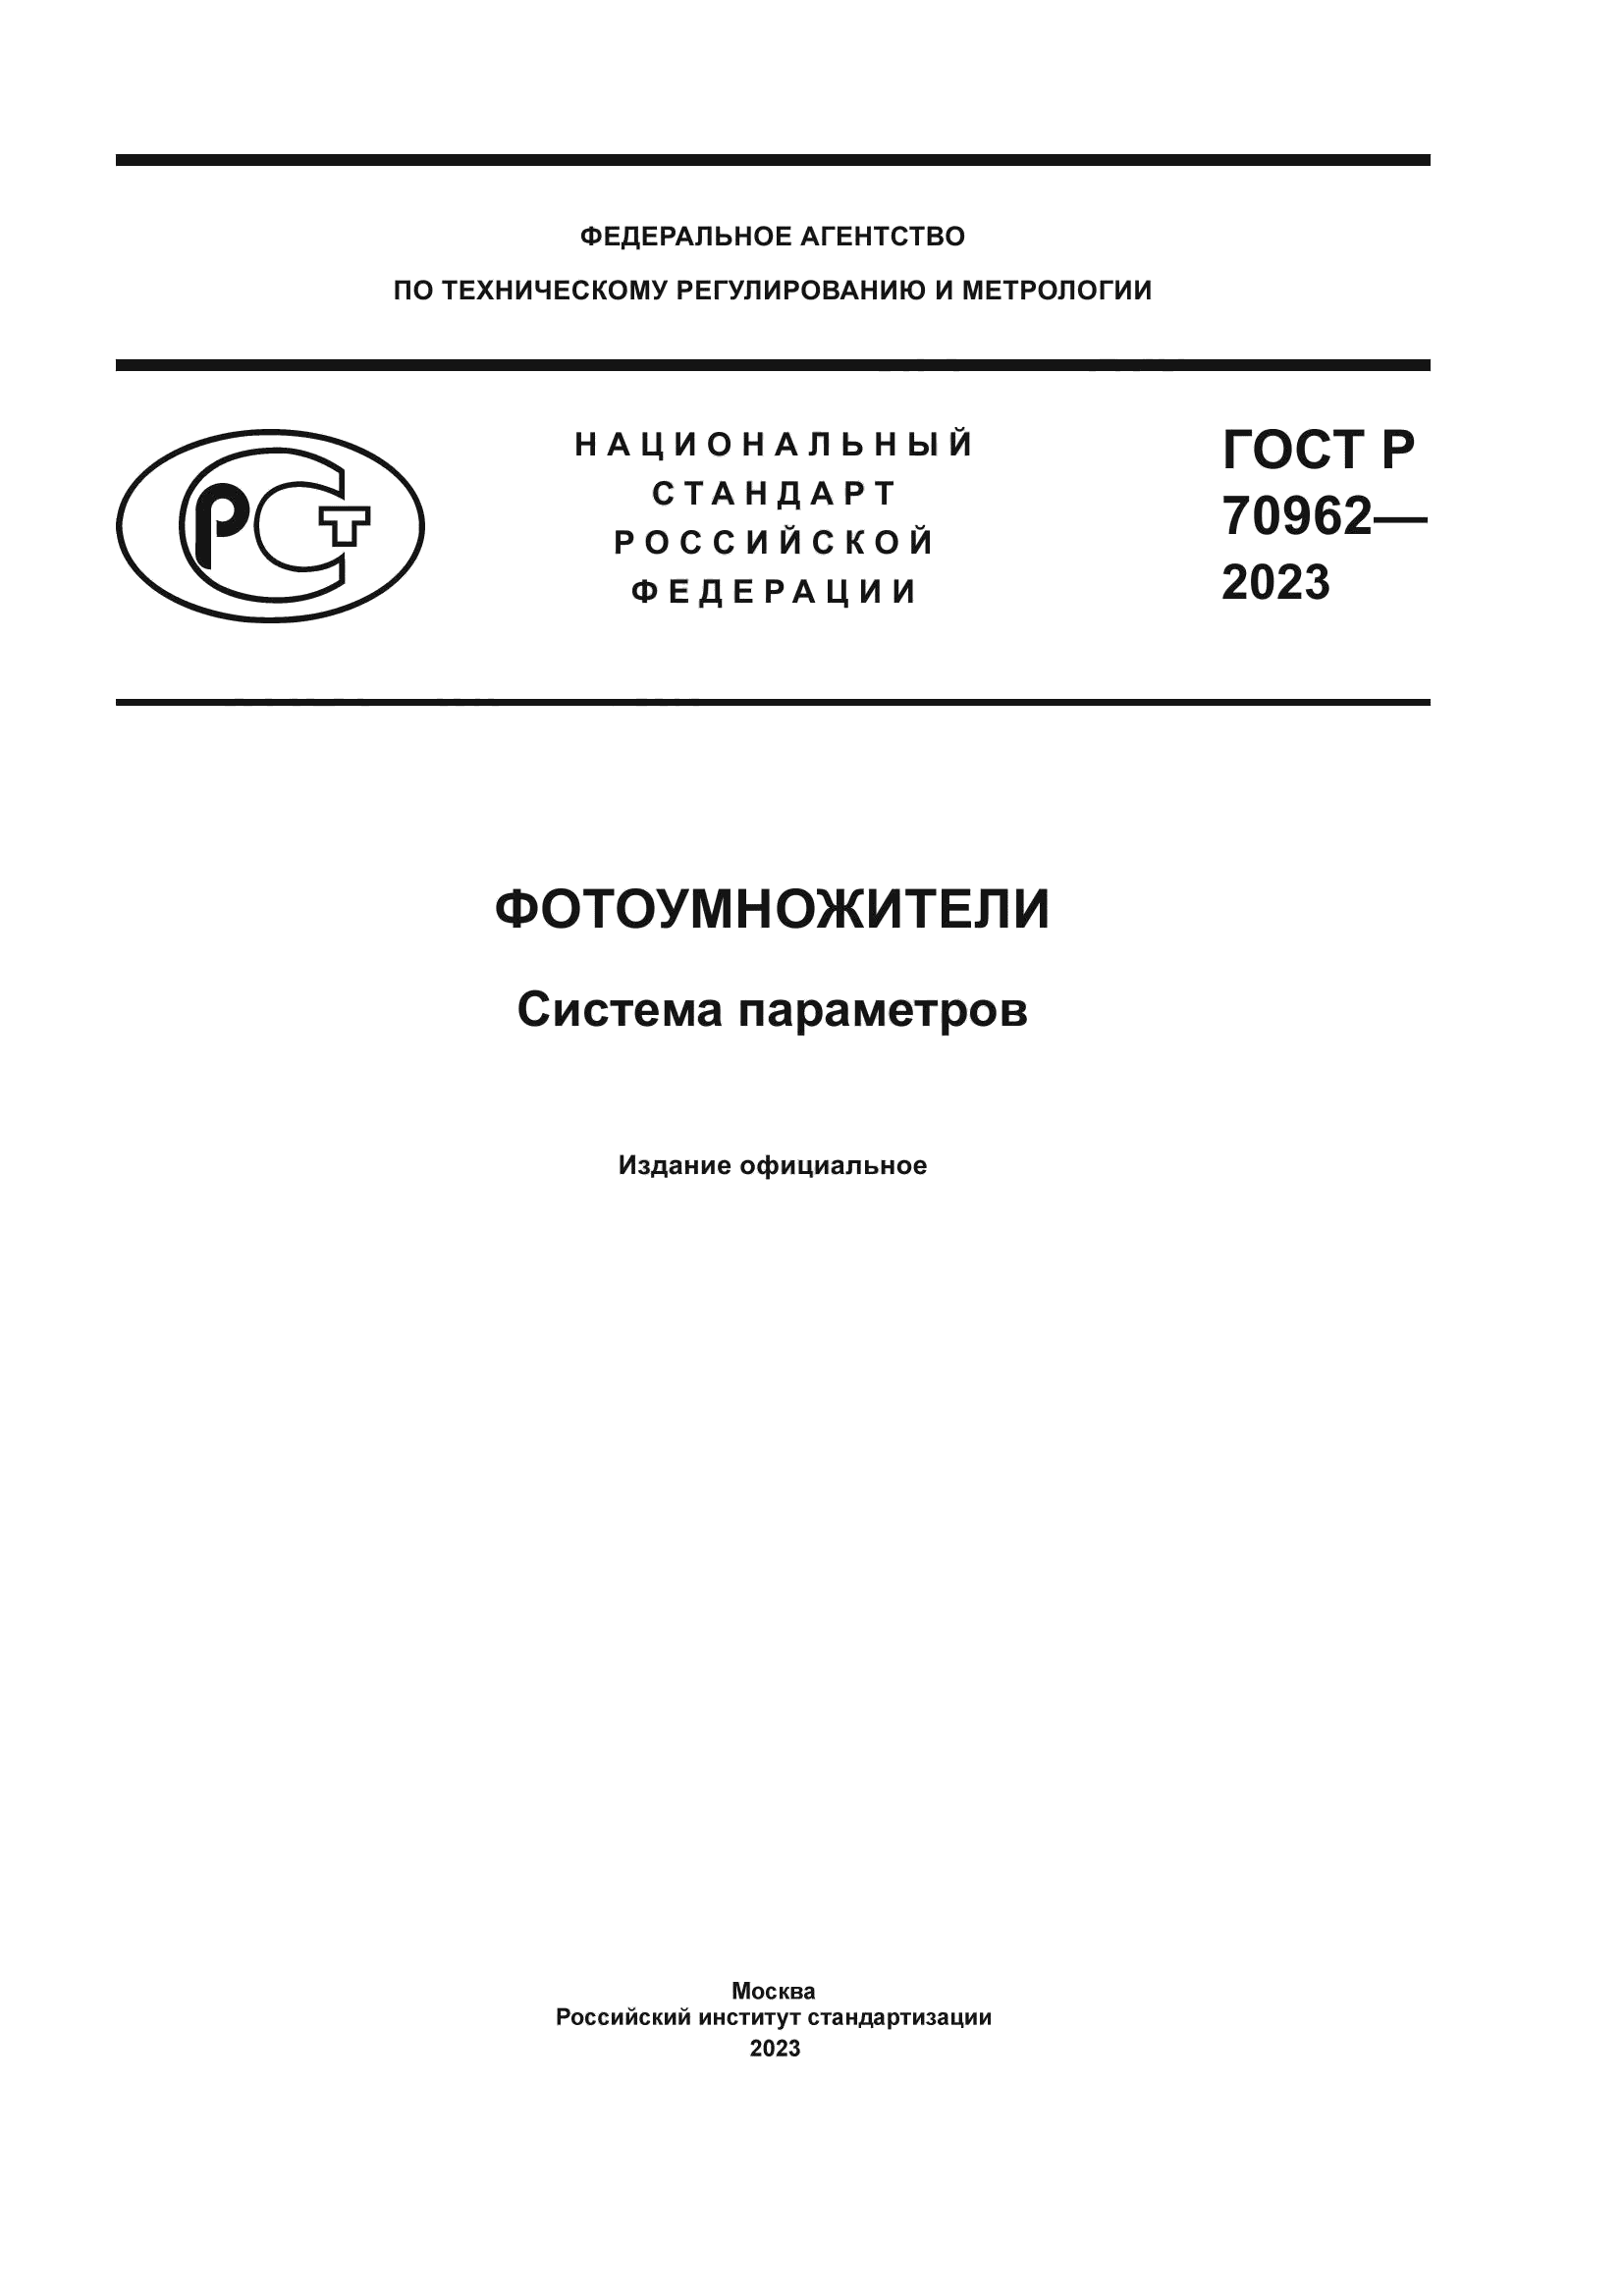 ГОСТ Р 70962-2023